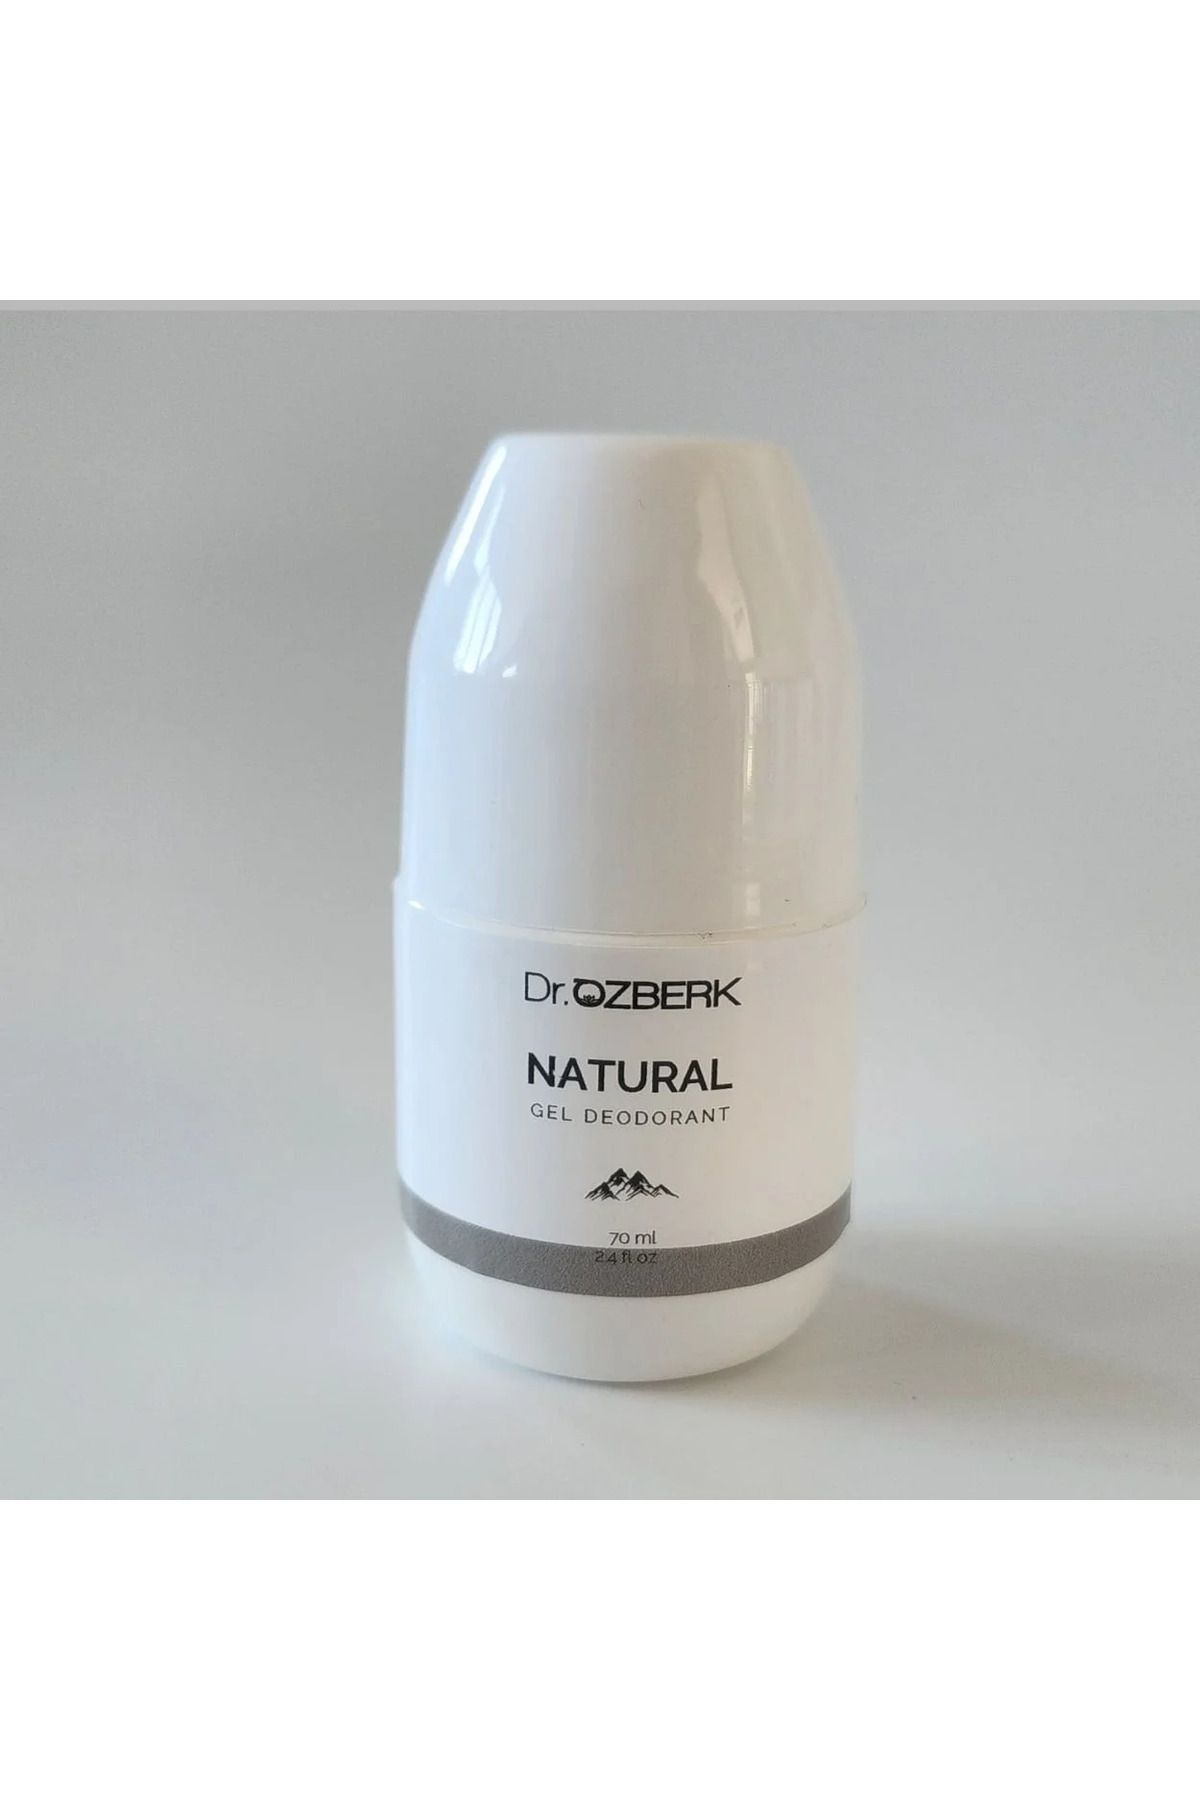 Dr. ÖZBERK Natural Gel Deodorant